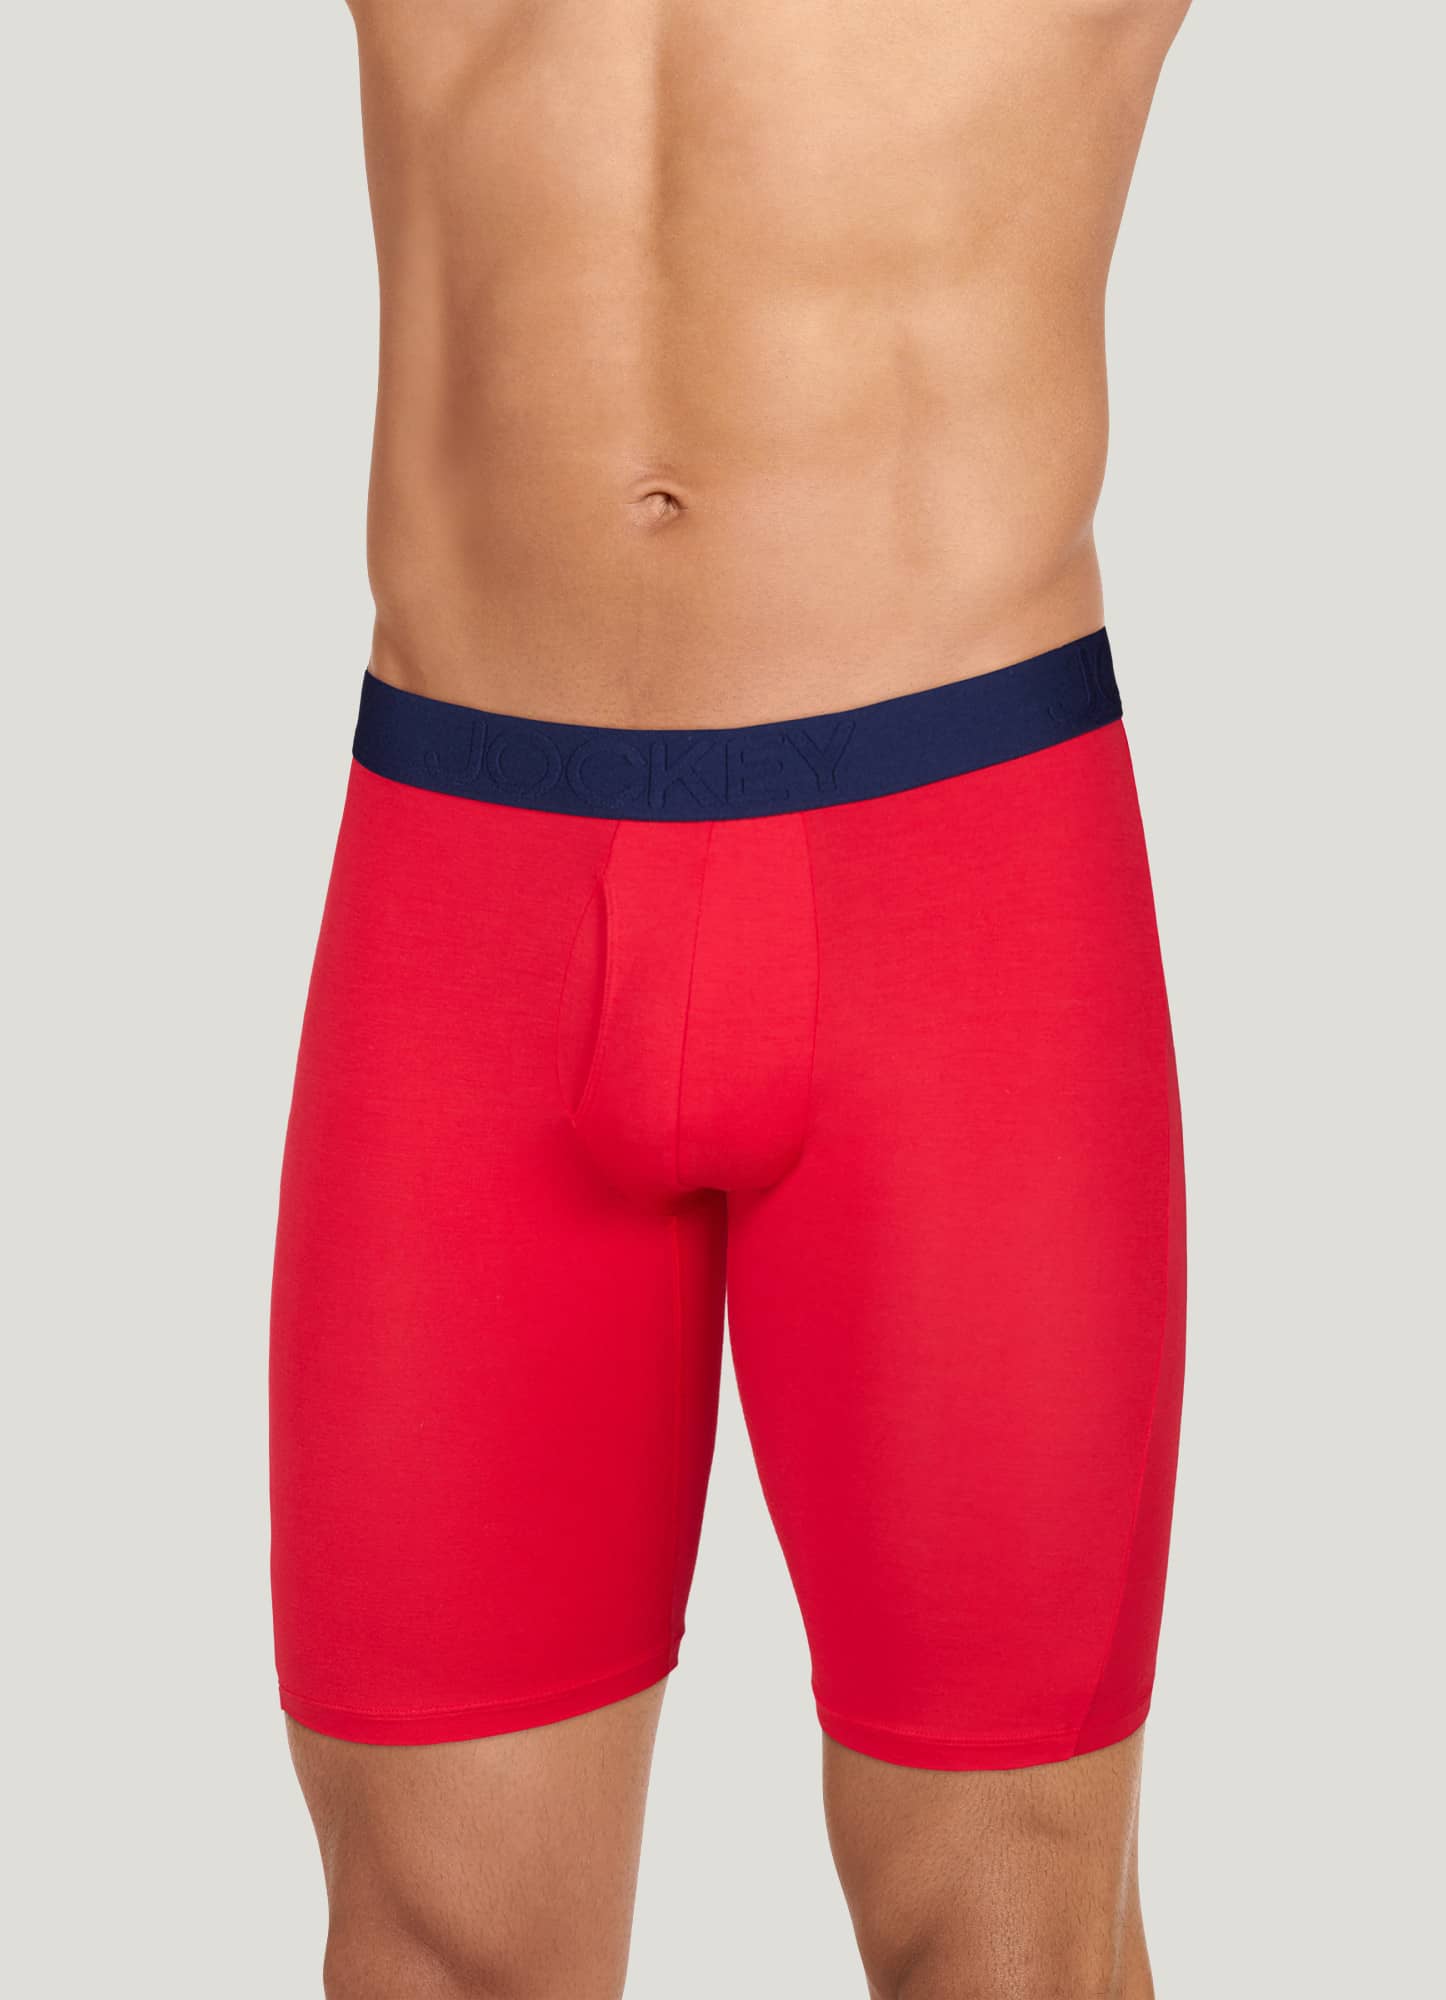 2pcs Men's Modal Sports Underwear Anti-Chafing Professional Running Fitness  Tight Long Leg Boxer Brief